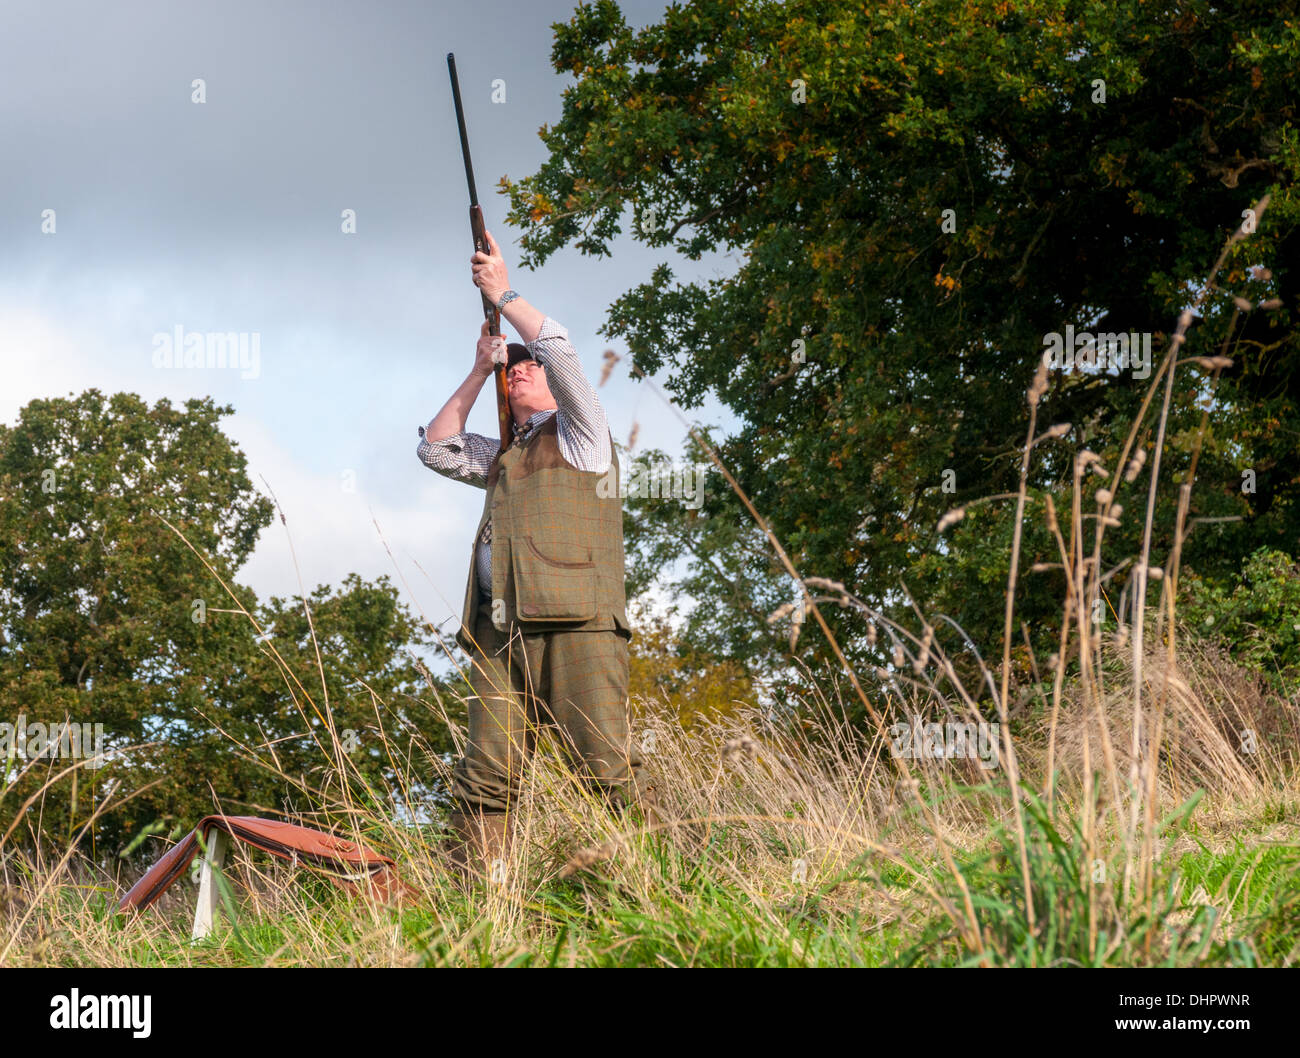 A man, often called a Gun, with a shotgun on a pheasant shoot in England Stock Photo